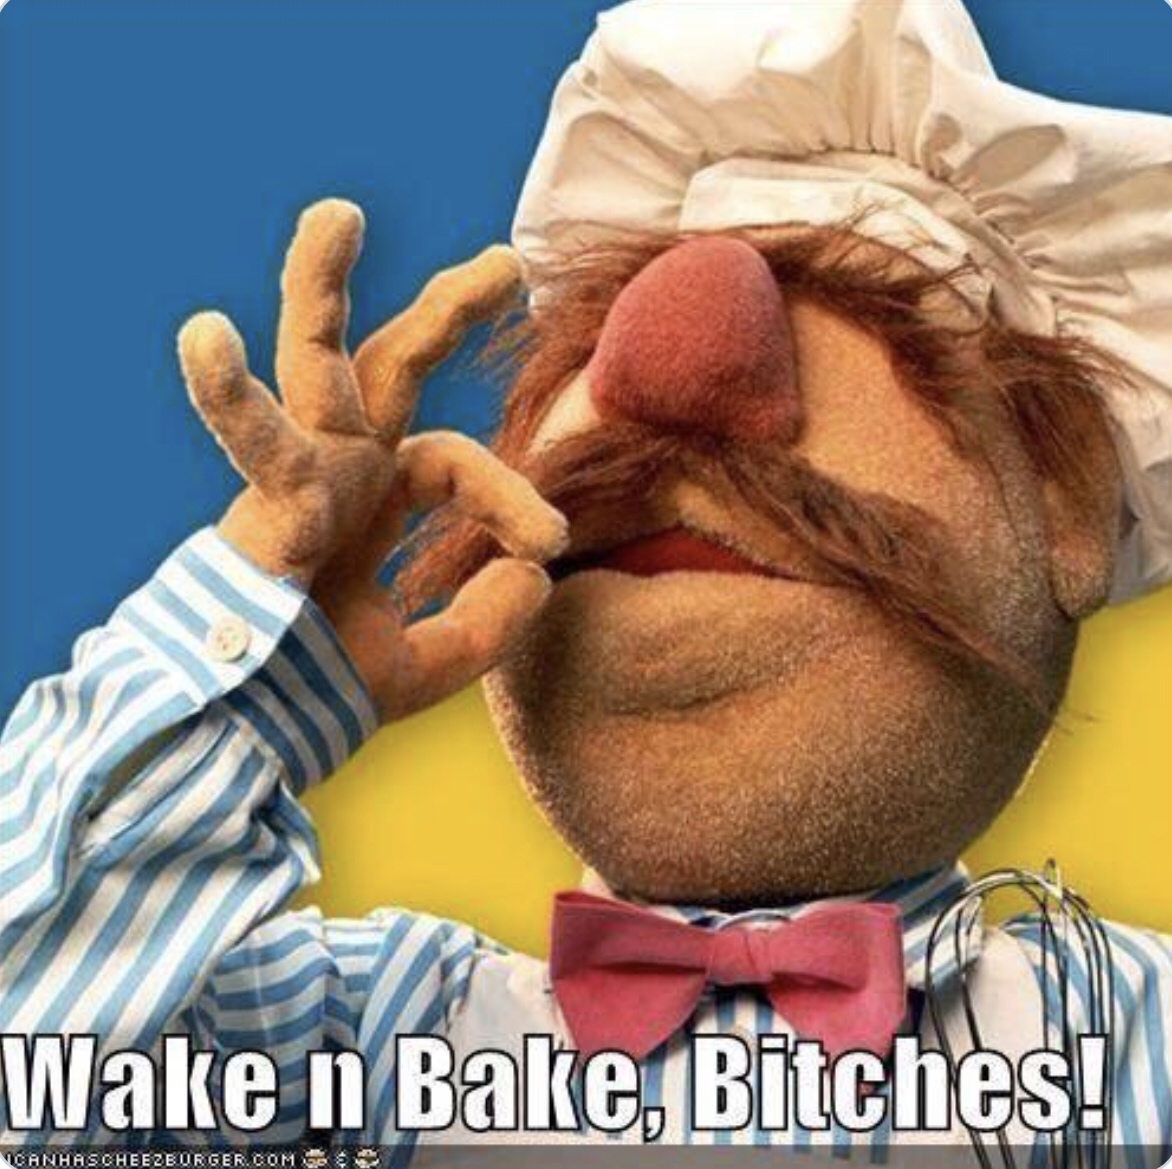 swedish chef muppets - Wake n Bake, Bitches! Canhascheezburger.Com